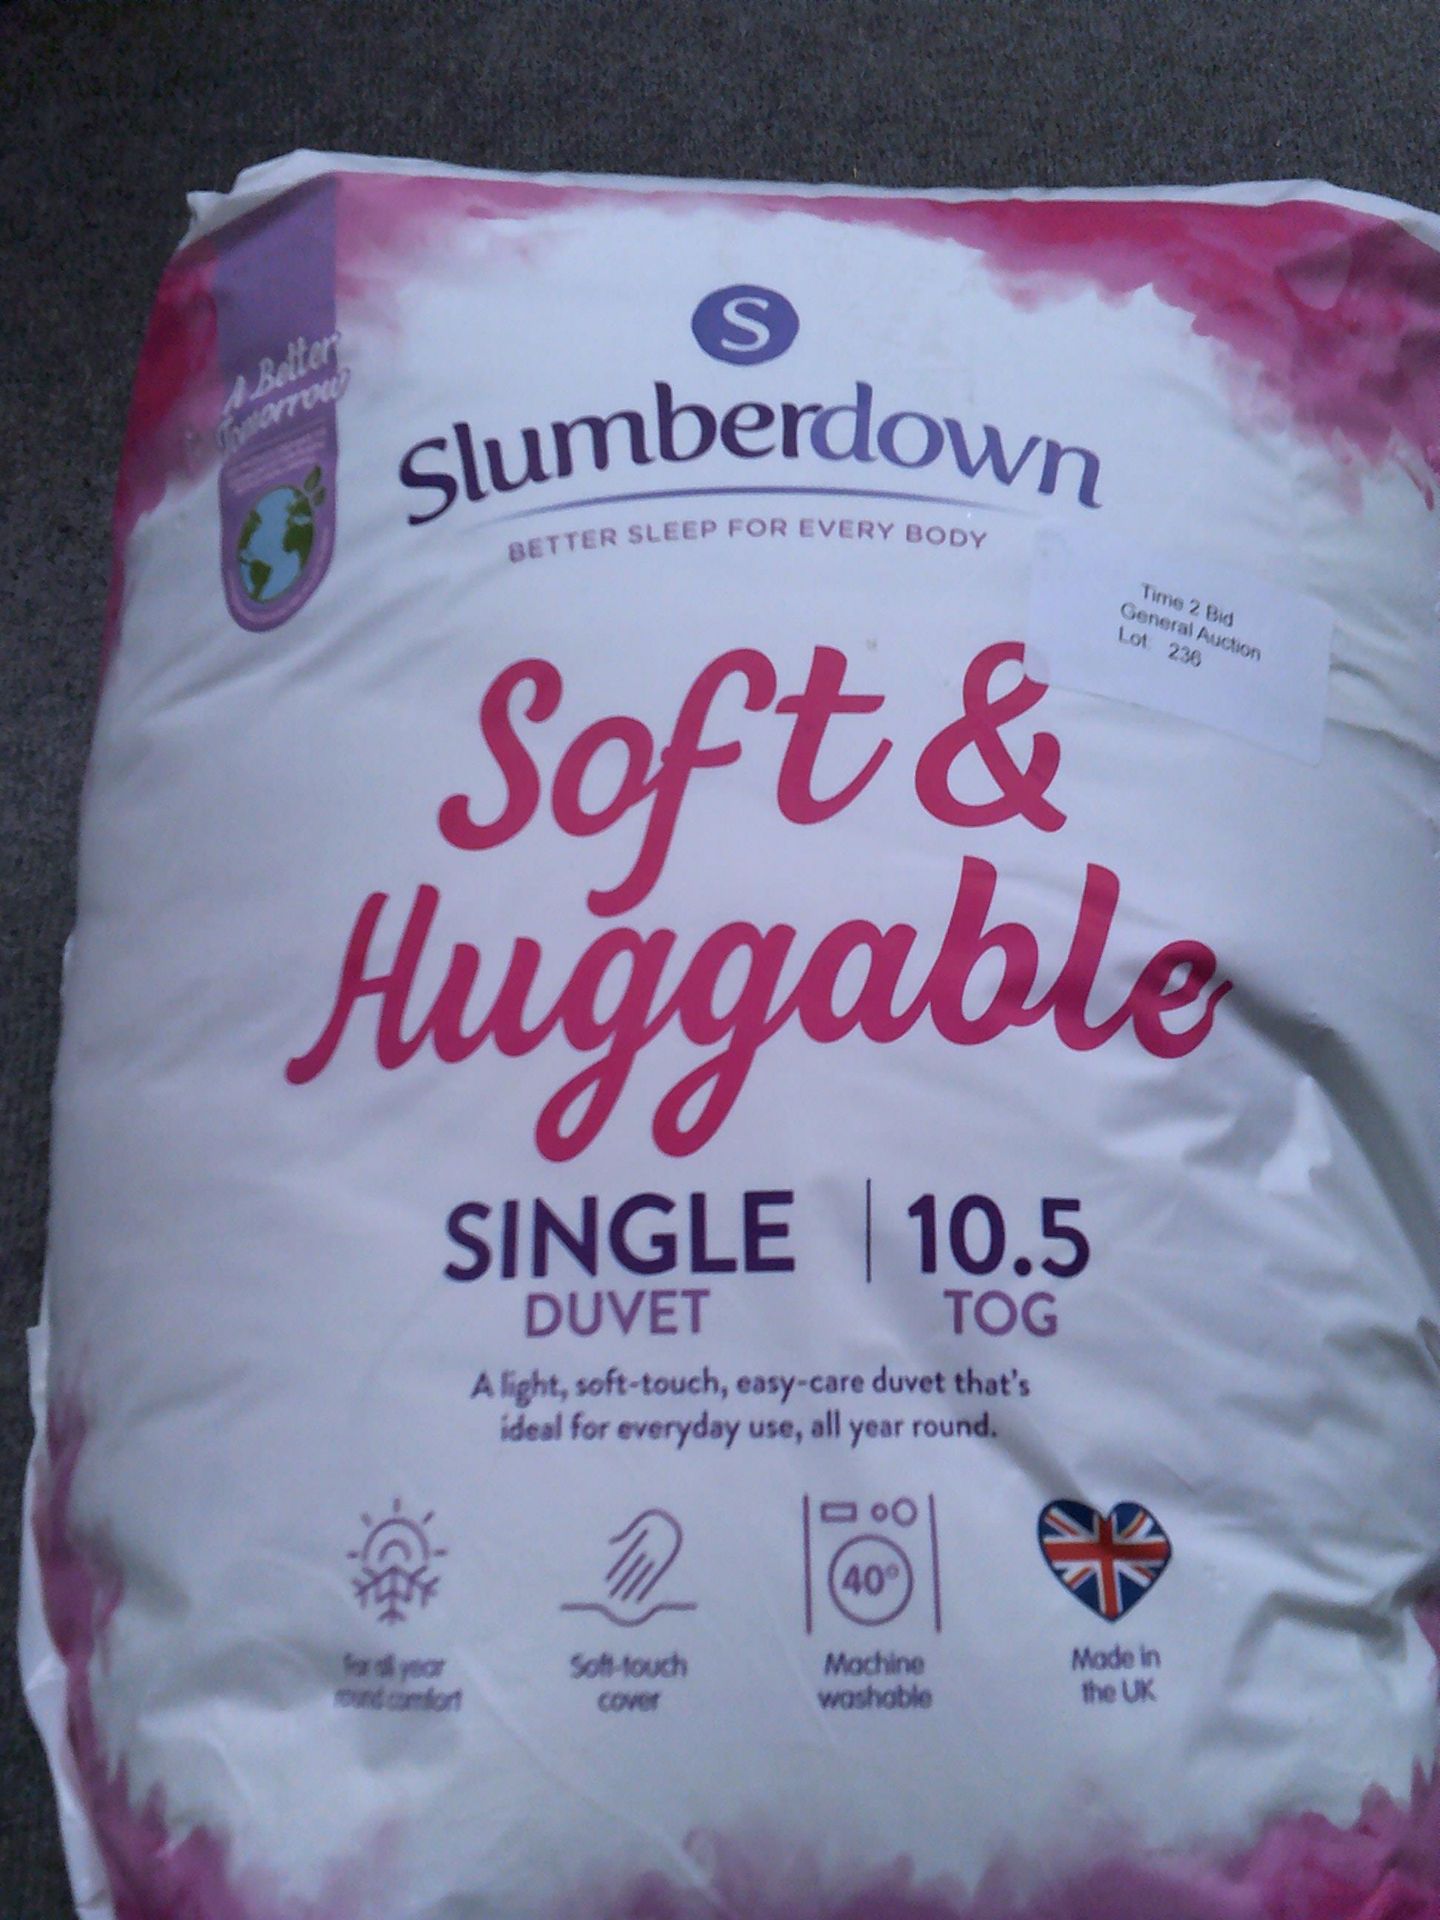 Slumberdown soft&huggable single duvet 10.5 tog (Delivery Band A)